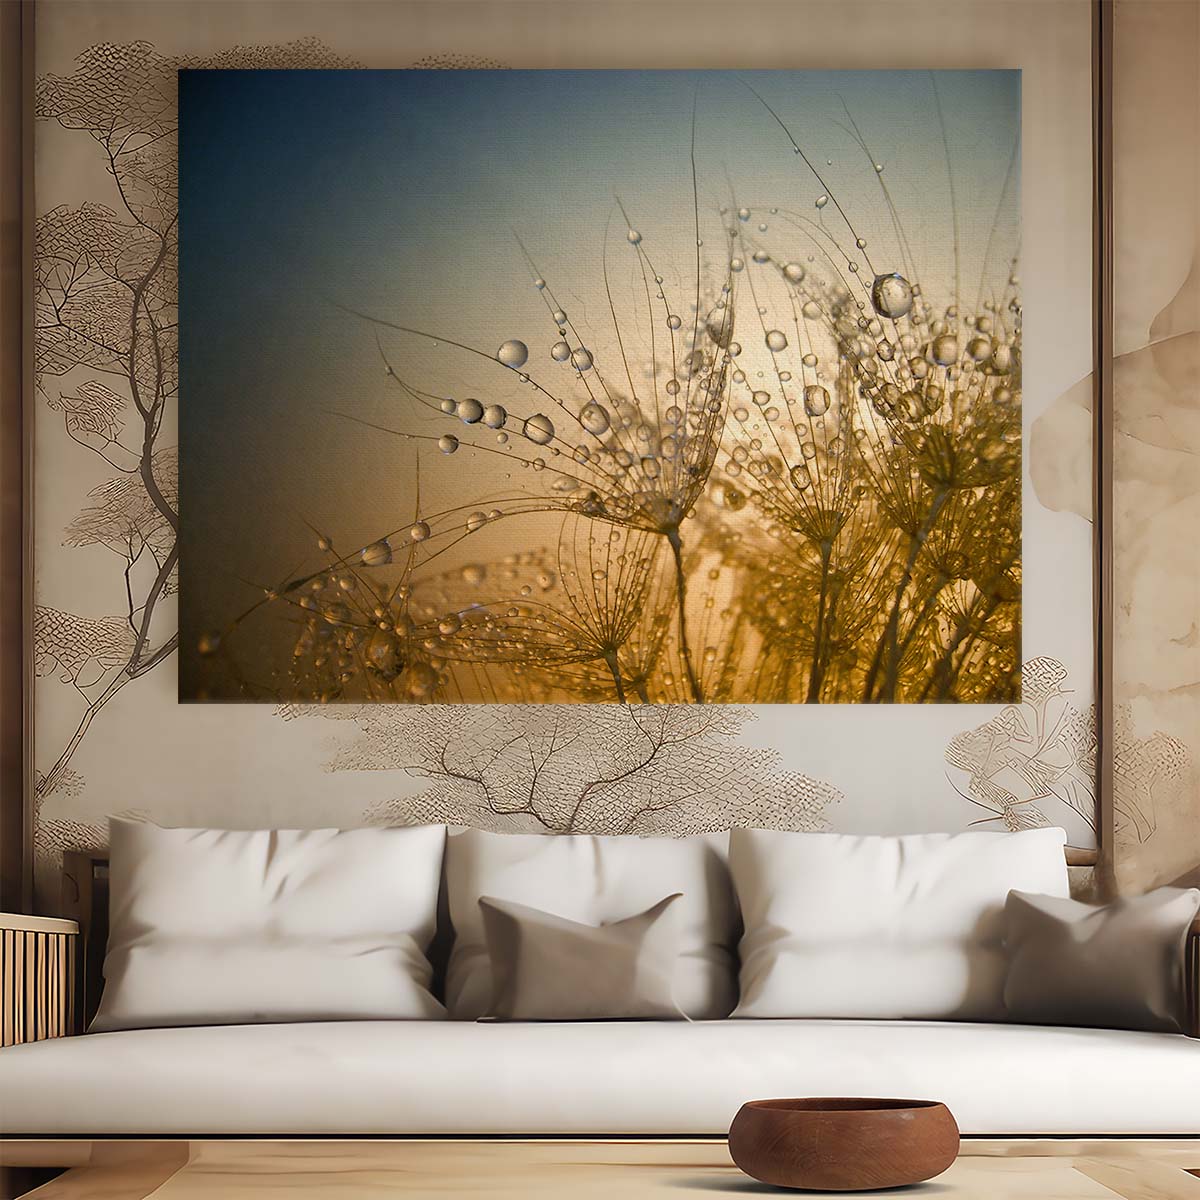 Golden Dewdrop Dandelion Macro Wall Art by Lazarov by Luxuriance Designs. Made in USA.